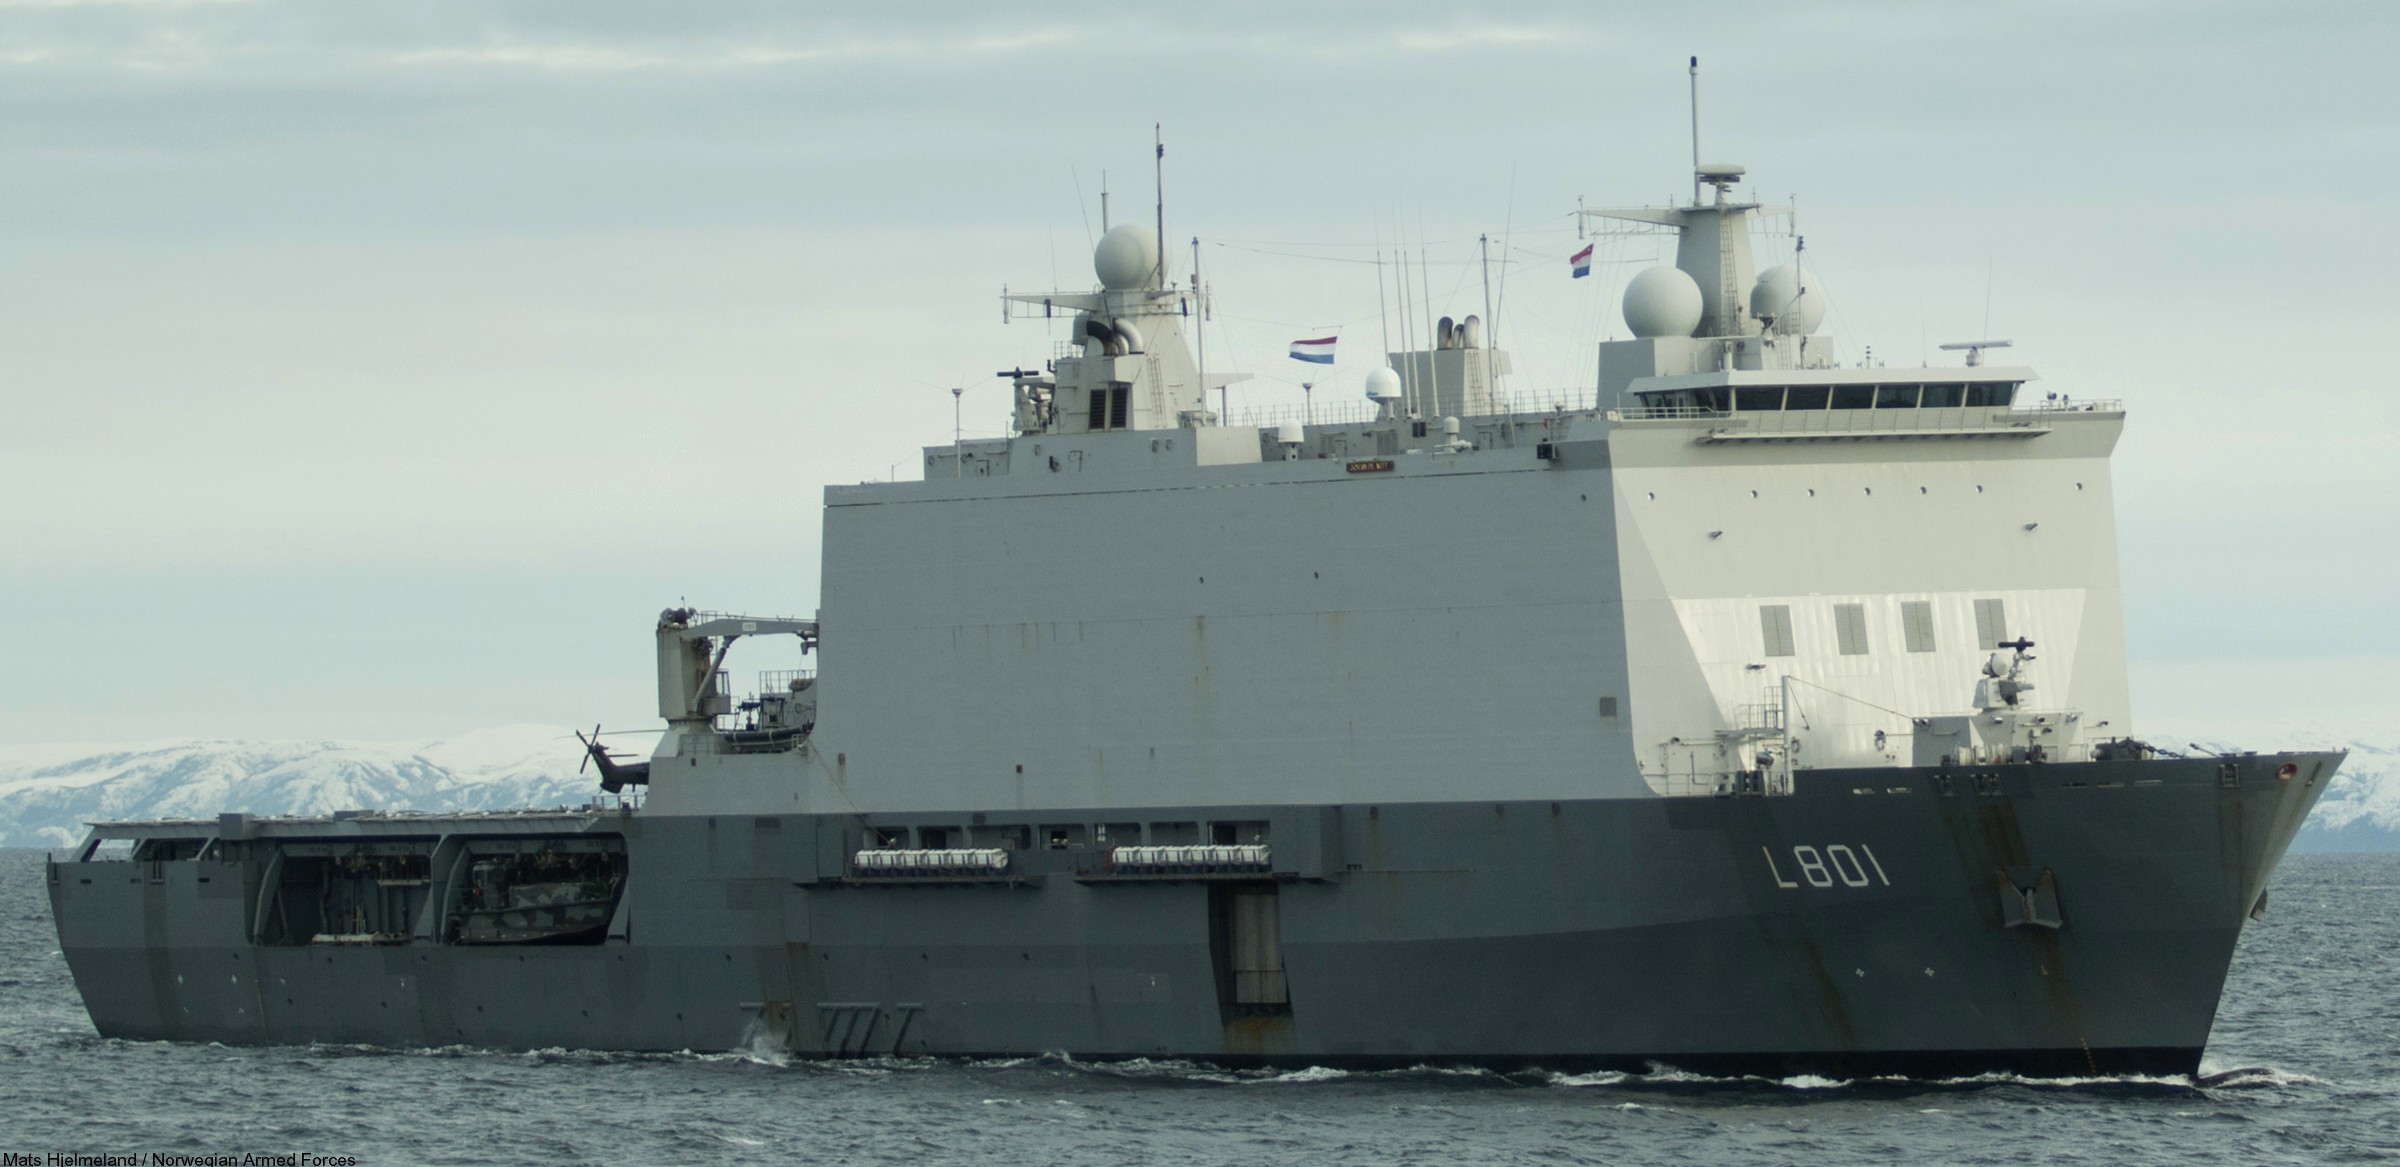 l-801 hnlms johan de witt amphibious ship landing platform dock lpd royal netherlands navy 42 koninklijke marine